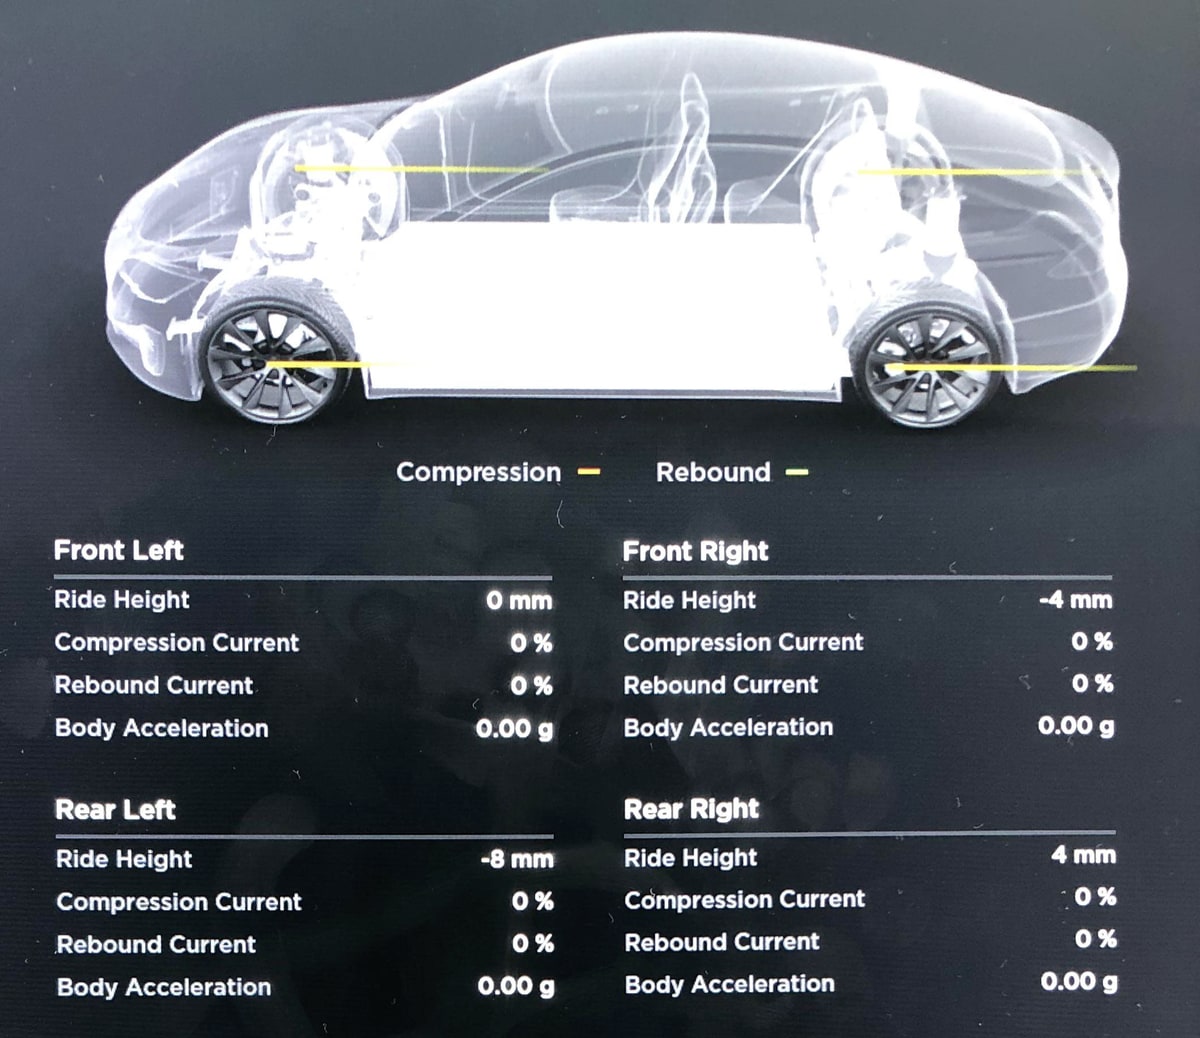 Tesla shows you real-time suspension metrics